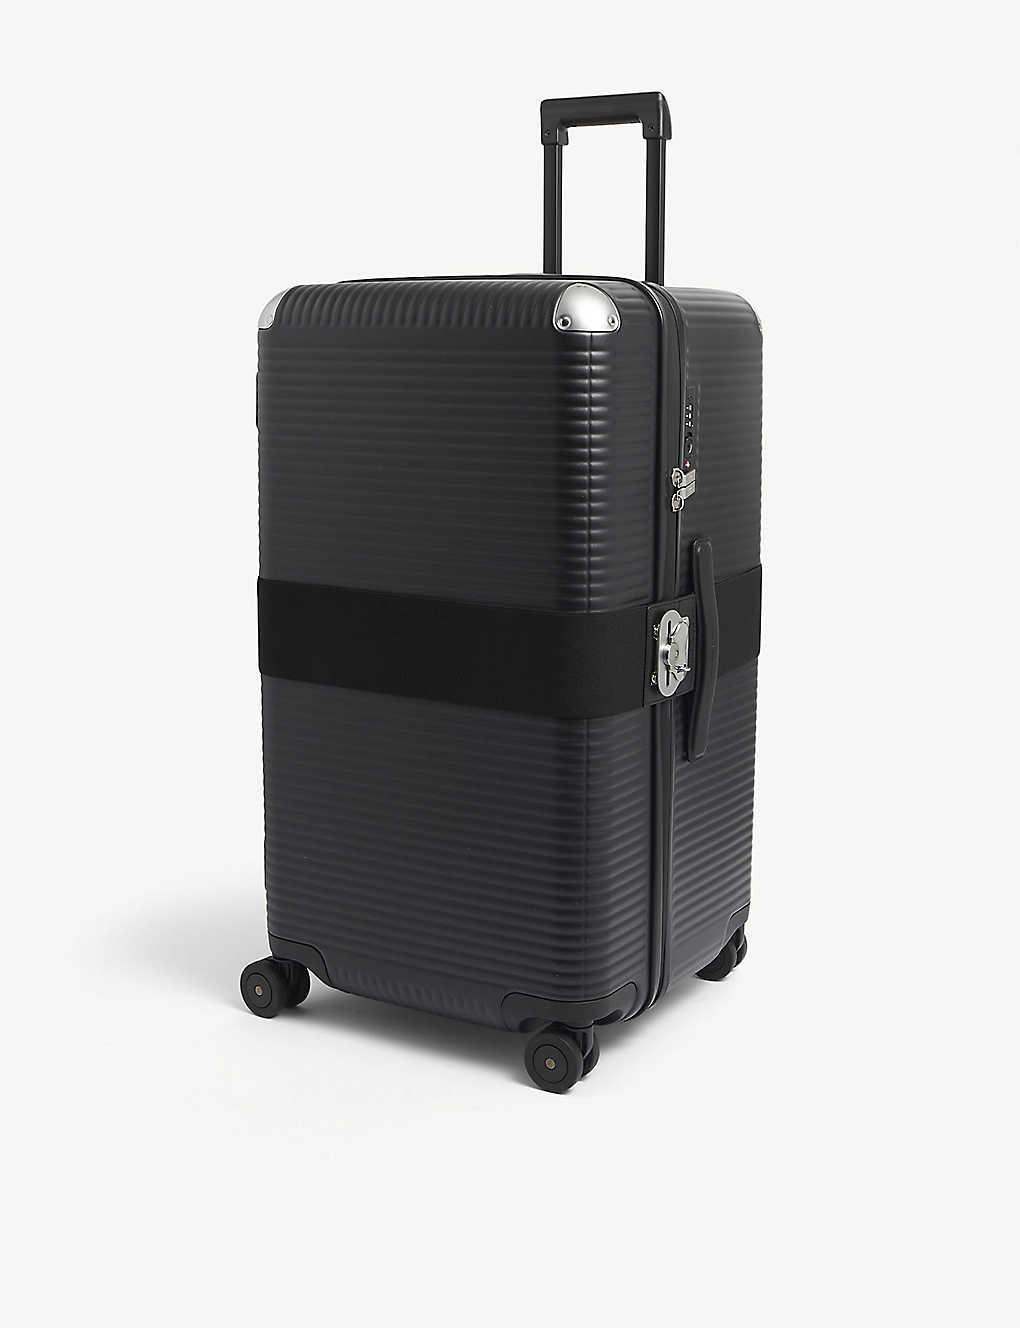 selfridges.com | FPM - FABBRICA PELLETTERIE MILANO Bank Trunk medium hard shell suitcase 73cm x 40cm